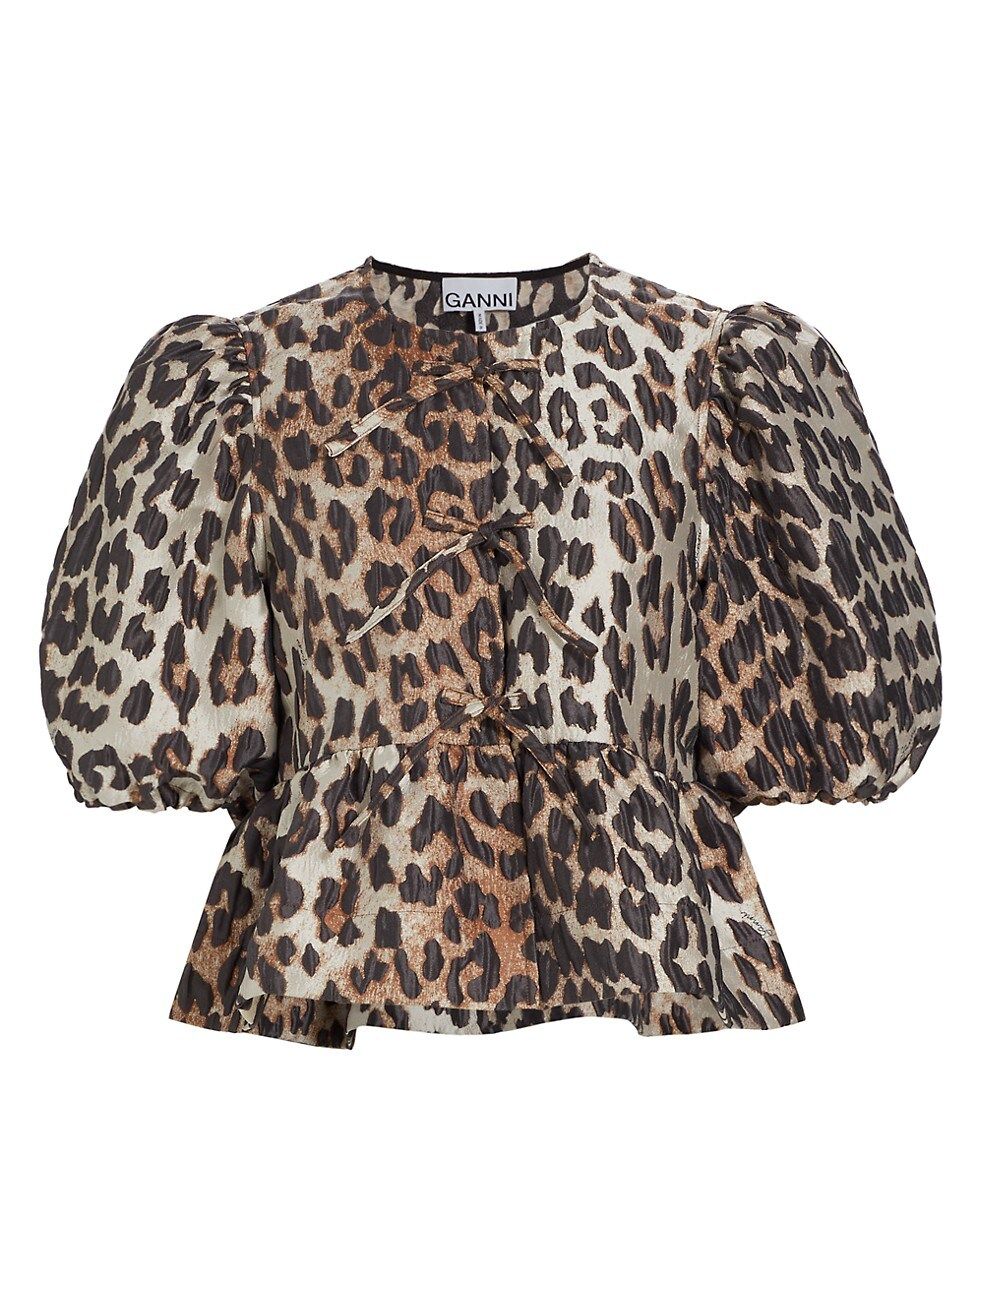 GANNI Leopard Jacquard Peplum Blouse | Saks Fifth Avenue